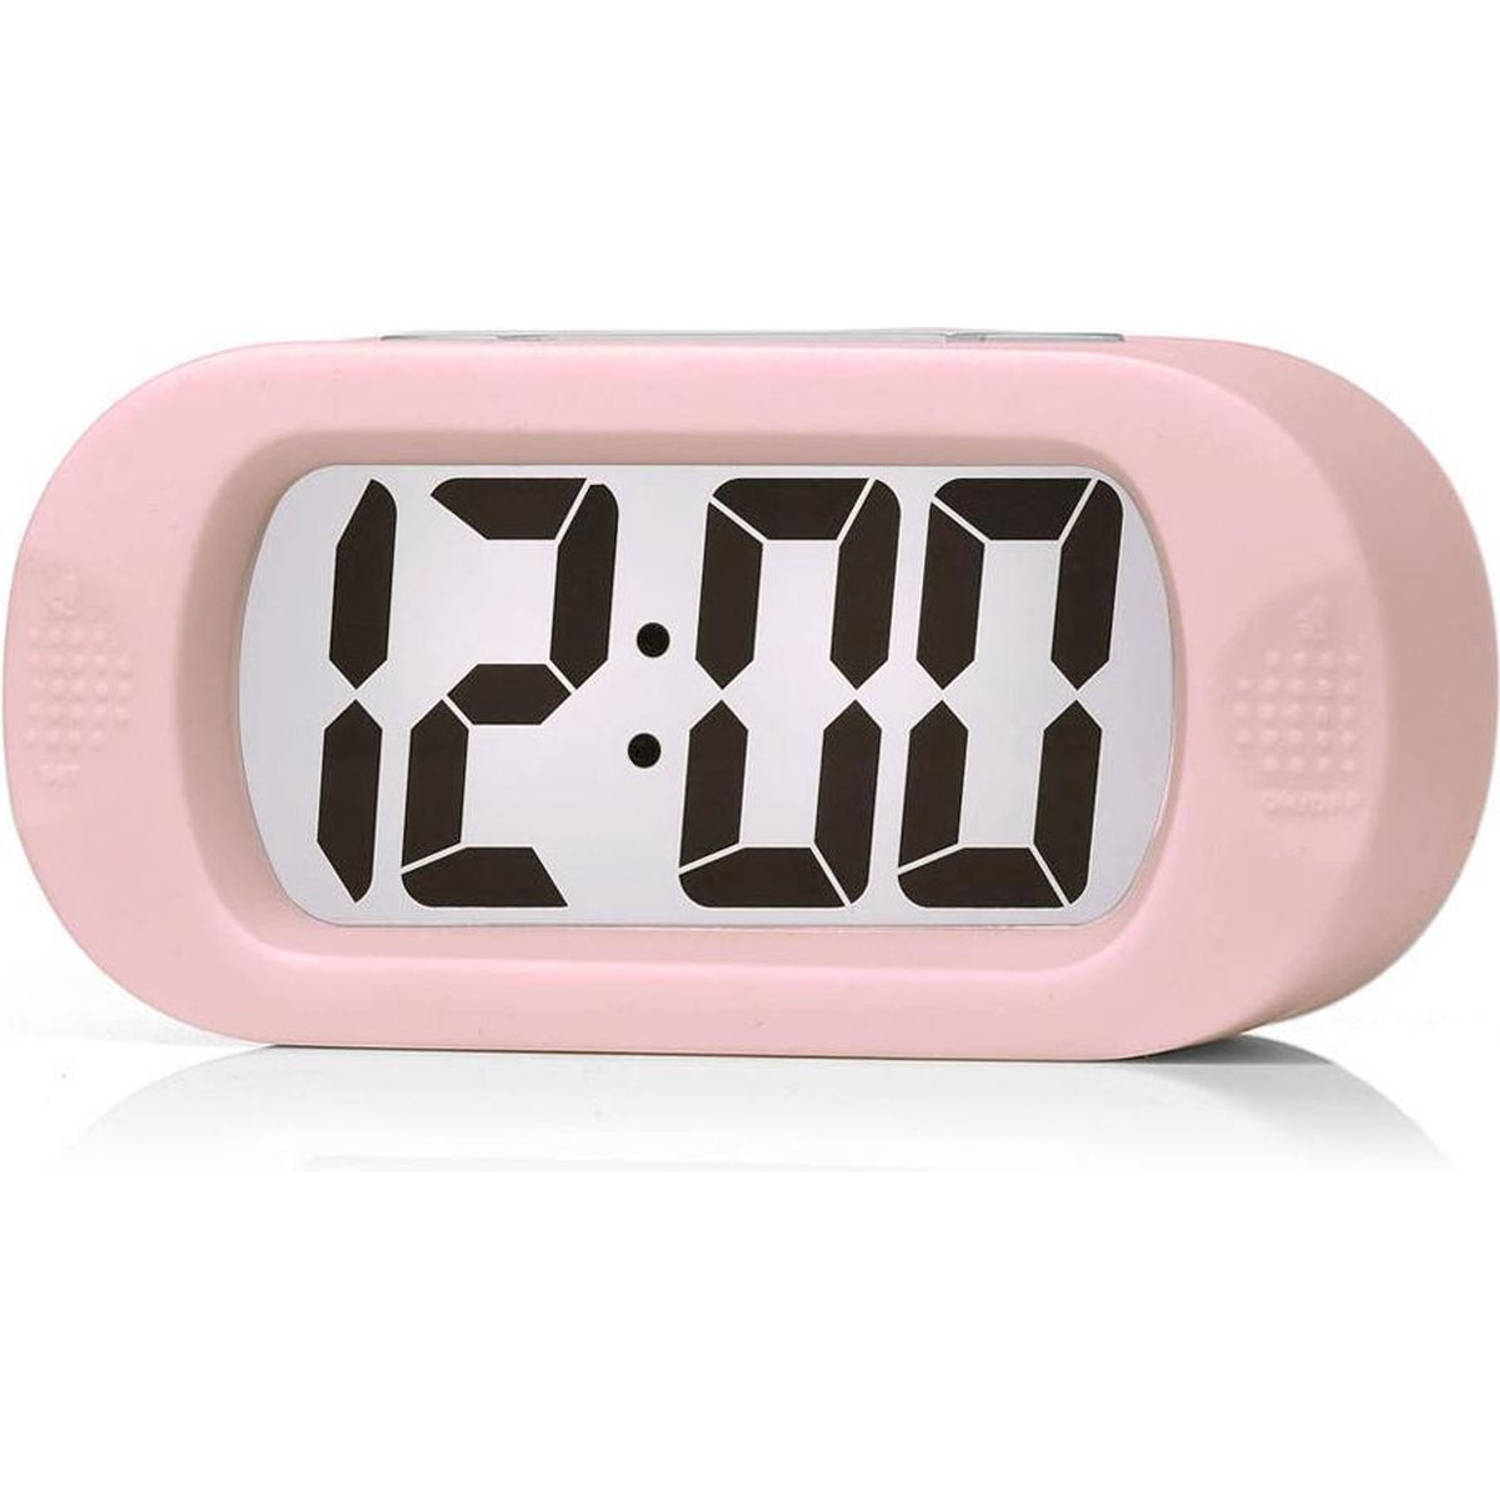 Jap Ap17 Digitale Wekker Stevige Alarmklok Met Snooze En Verlichtingsfunctie Rubber Pastelle Roze